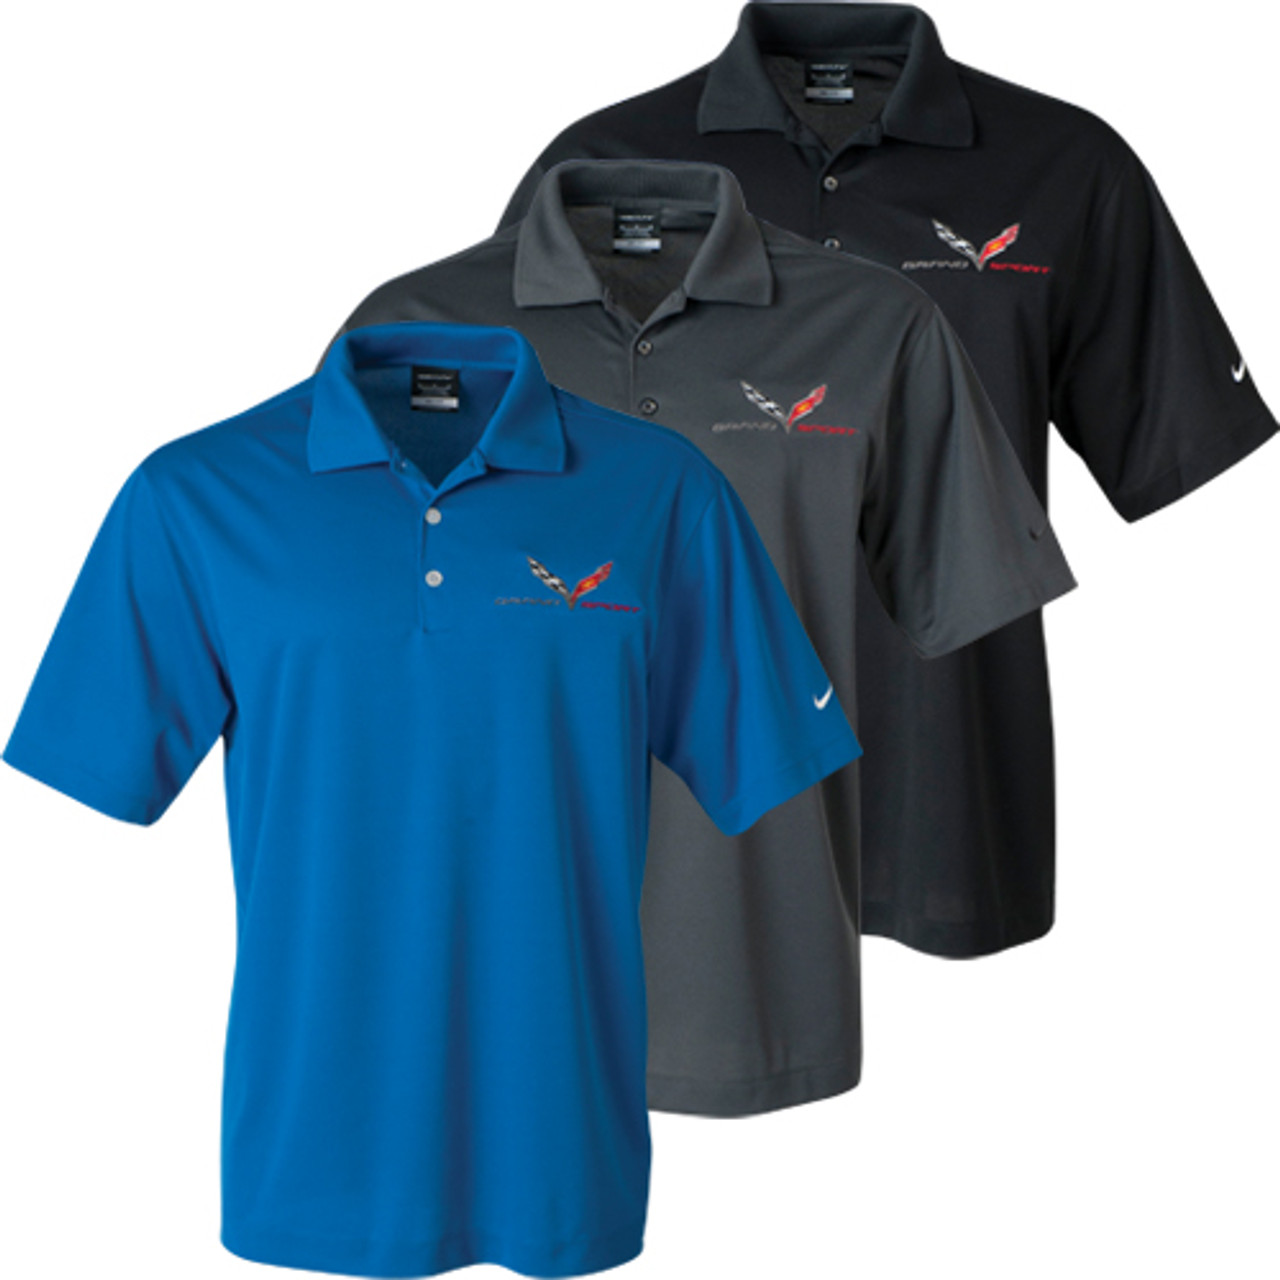 C7 Corvette Grand Sport Nike Polo Shirts